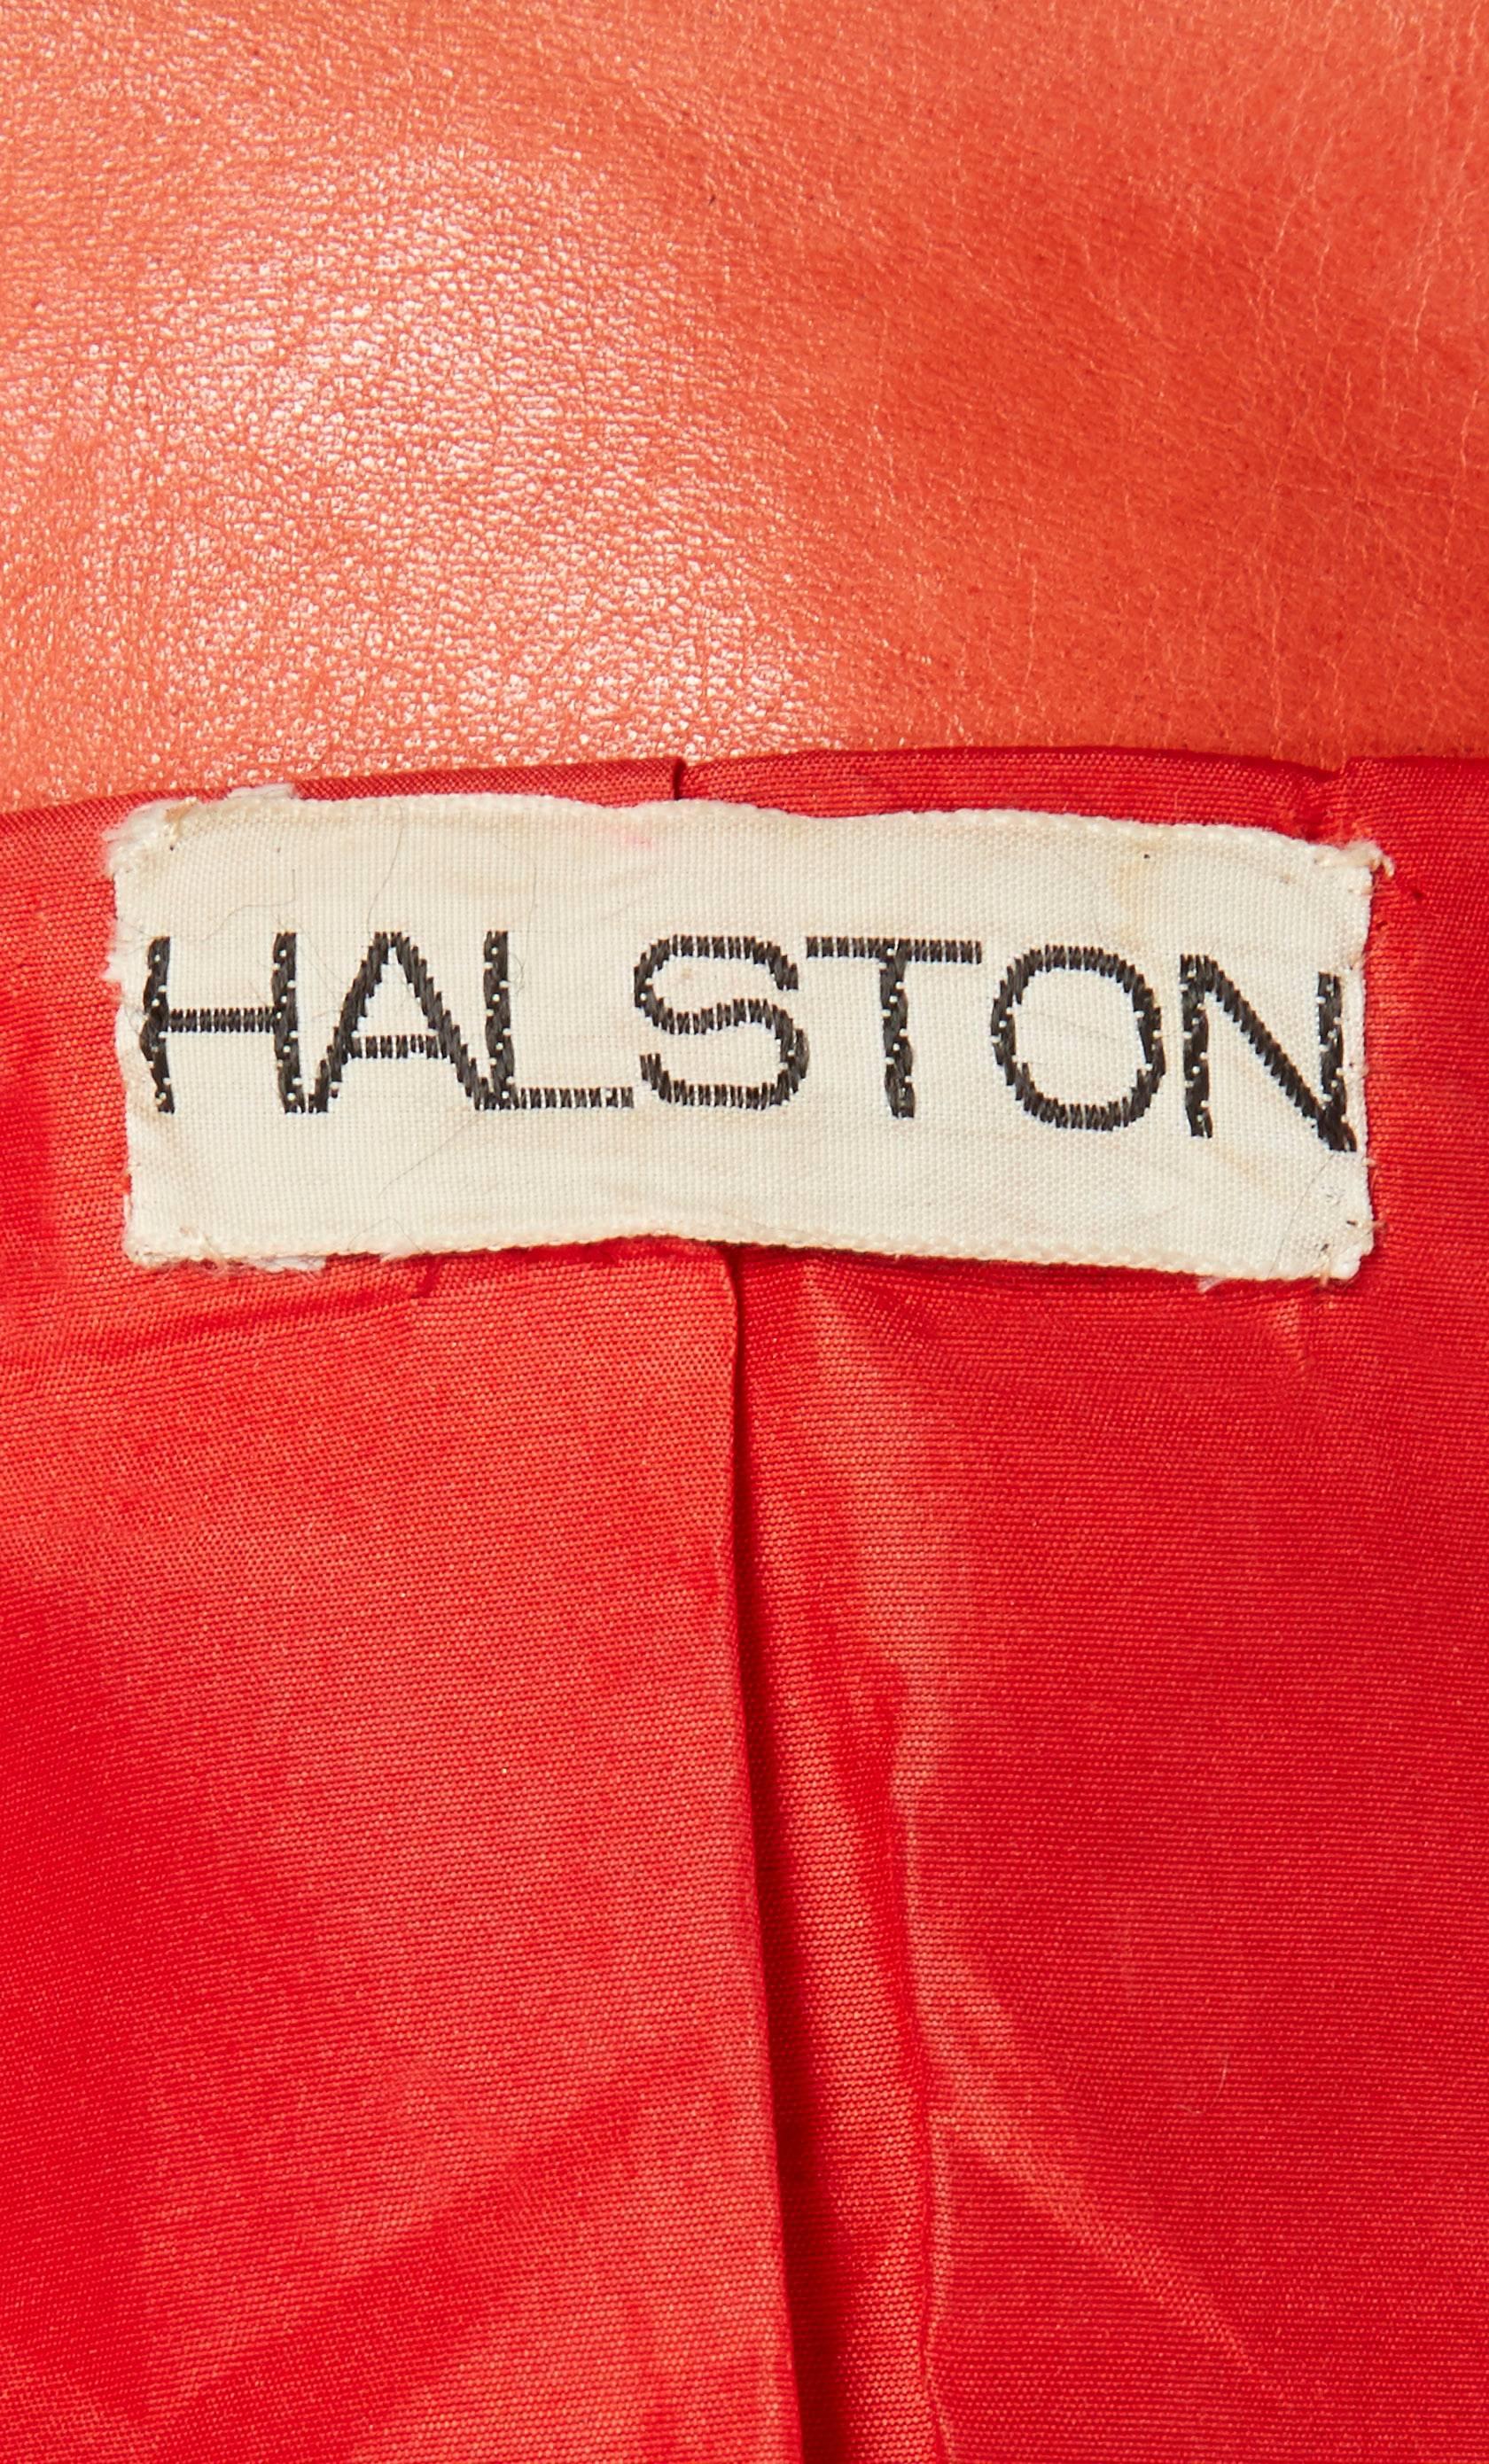 Women's Halston red coat, circa 1970